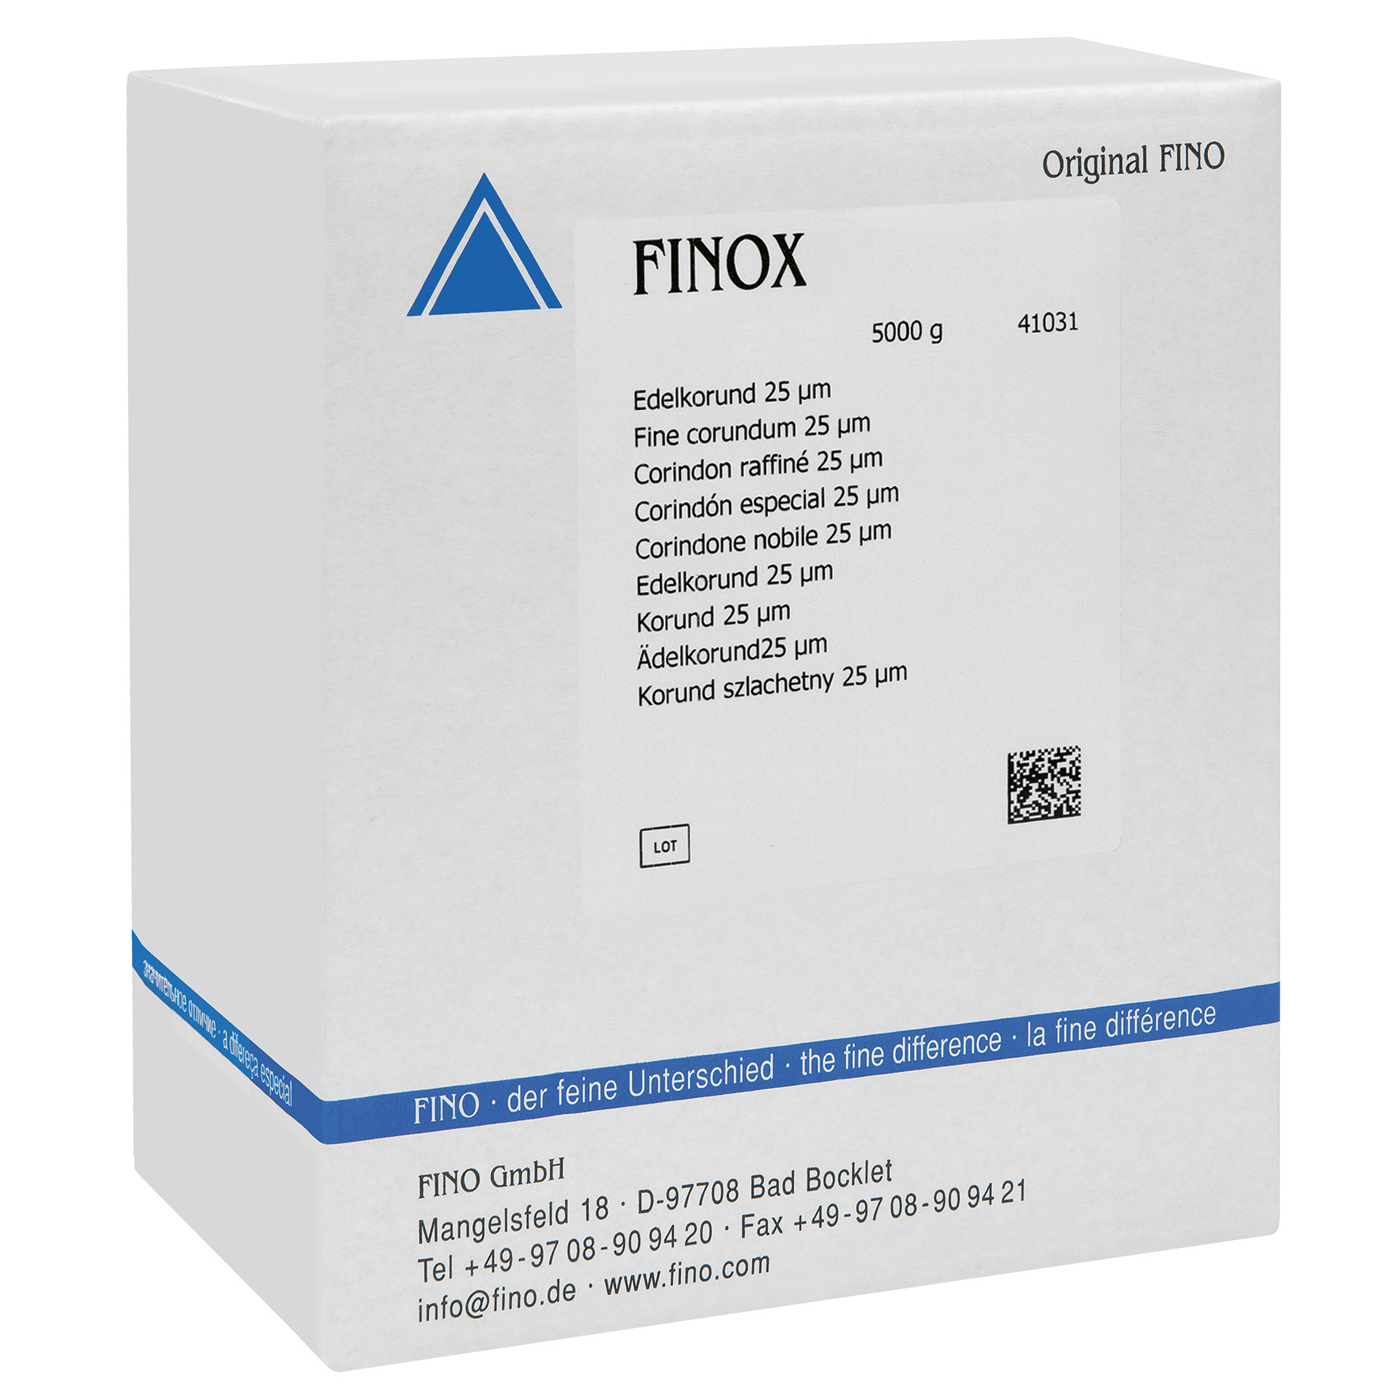 FINOX High-Grade Corundum, 25 µm - 5000 g